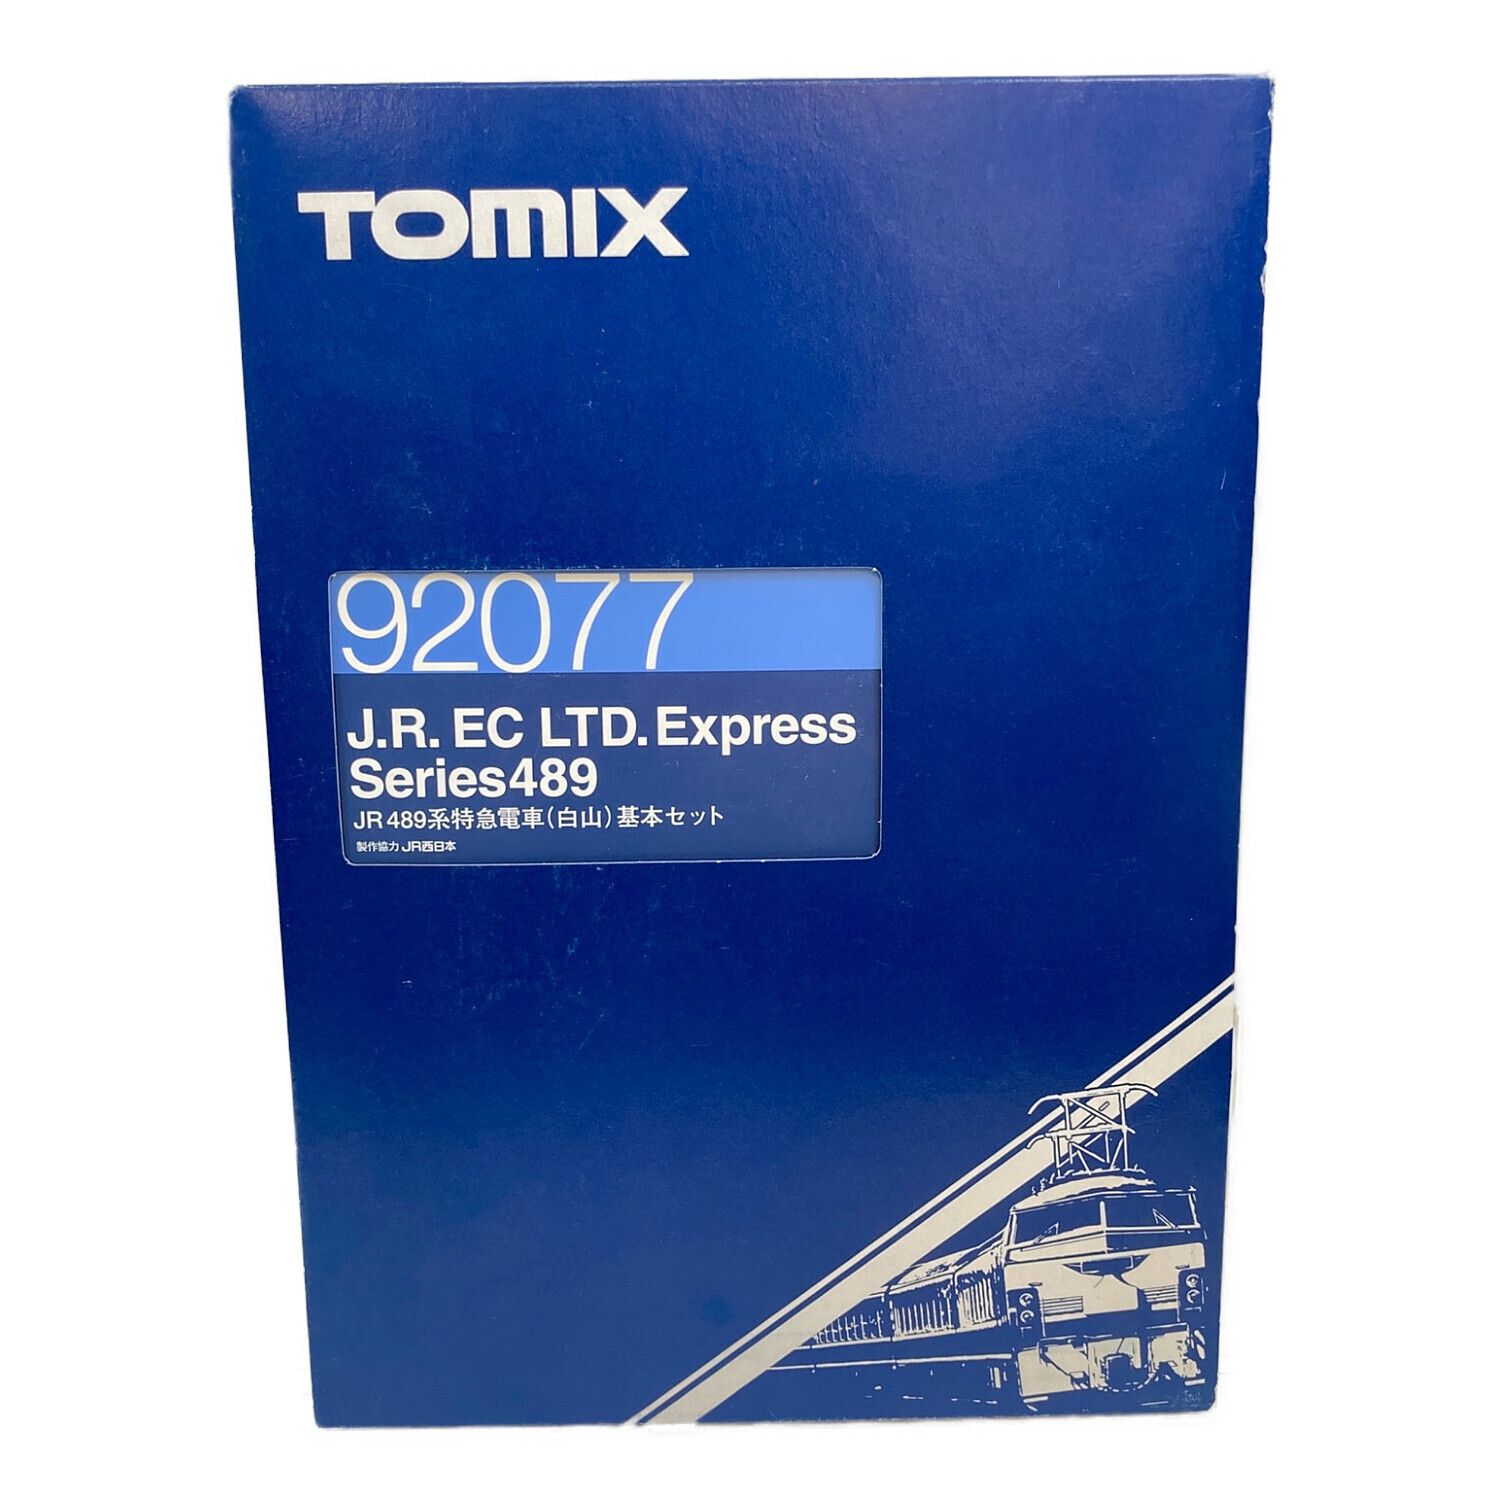 TOMIX (トミックス) Nゲージ JR489系特急電車(白山)基本セット 